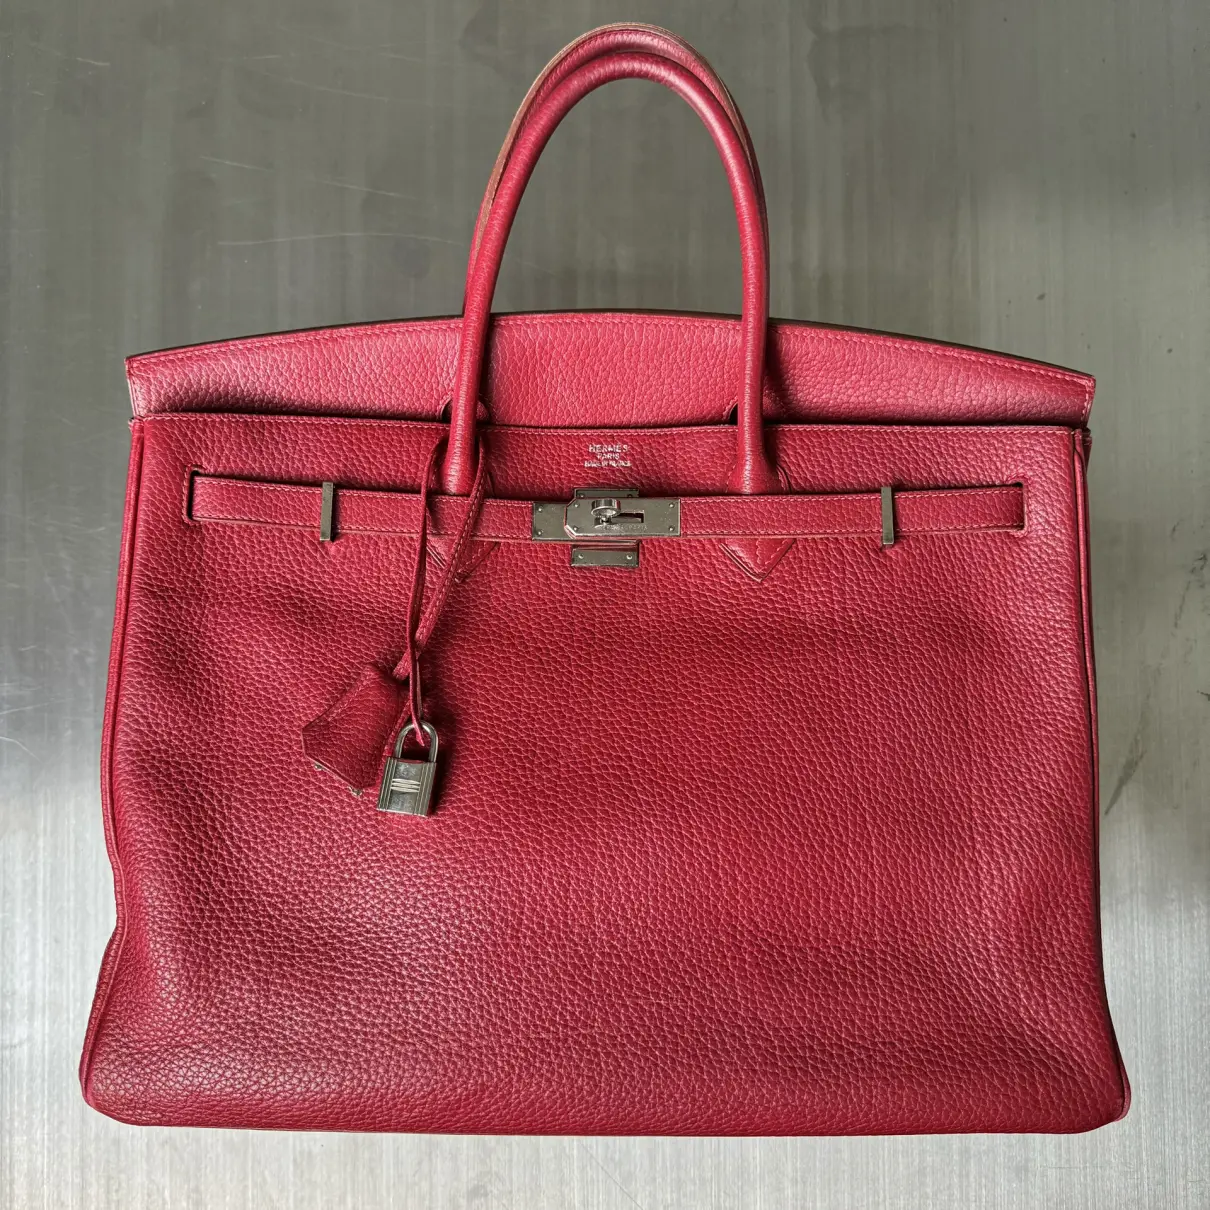 Buy Hermès Birkin 40 leather handbag online - Vintage